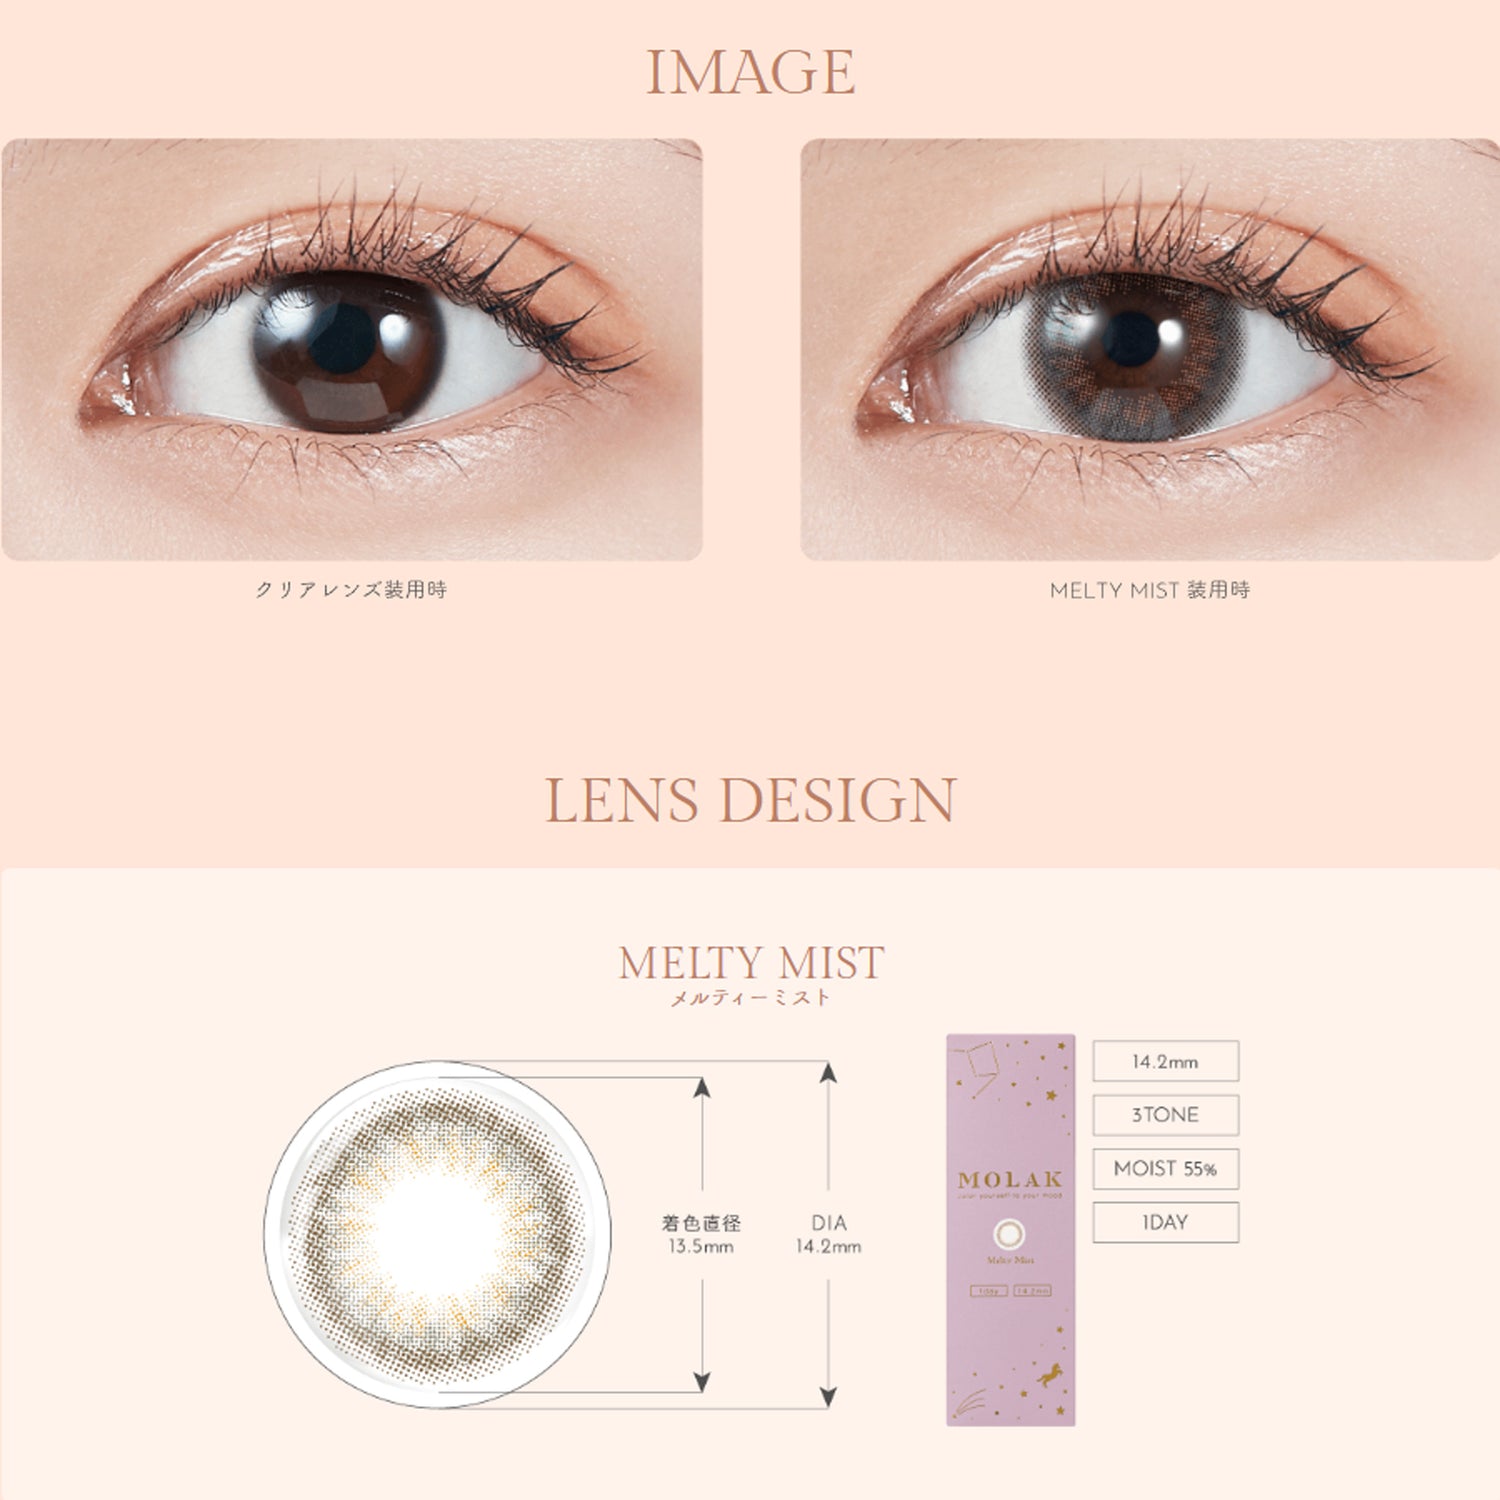 MOLAK 1Day Contact Lenses-Melty Mist 10pcs